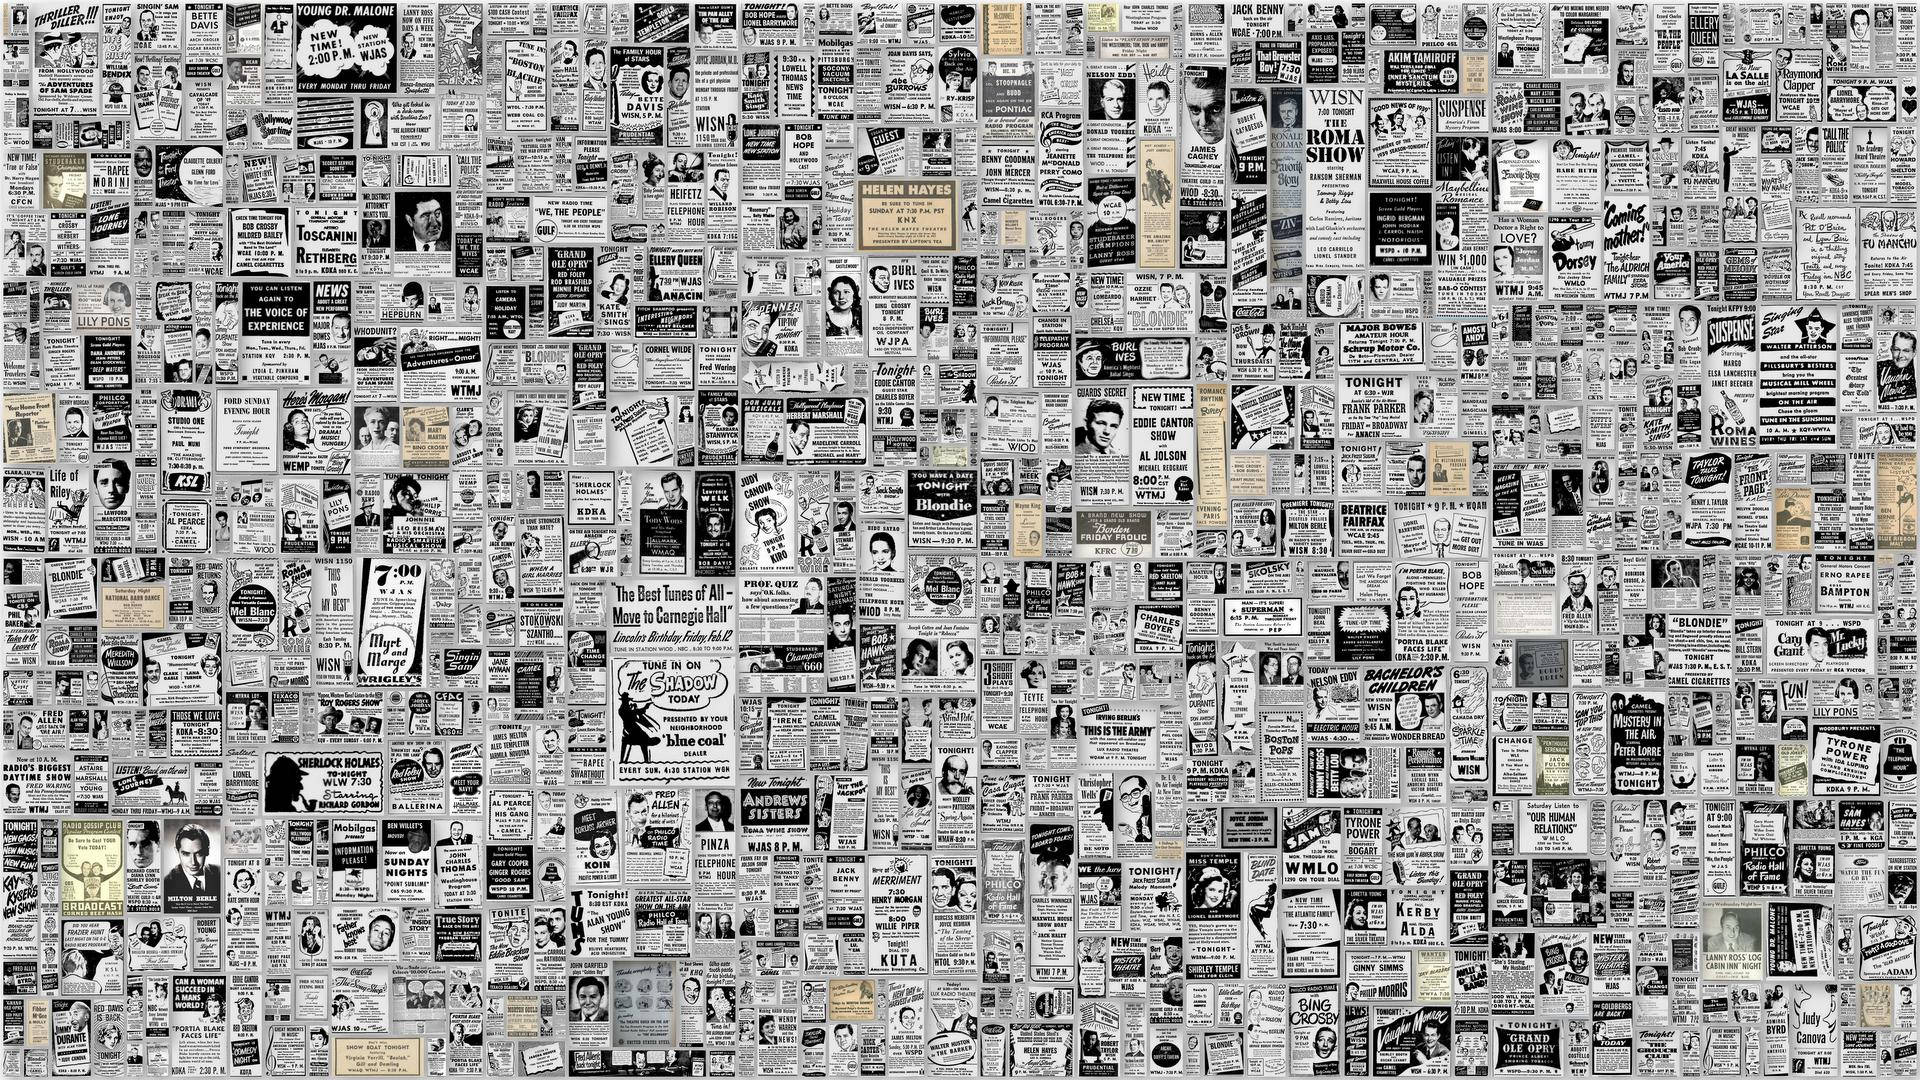 Free Newspaper Aesthetic Wallpaper Downloads, Newspaper Aesthetic Wallpaper for FREE